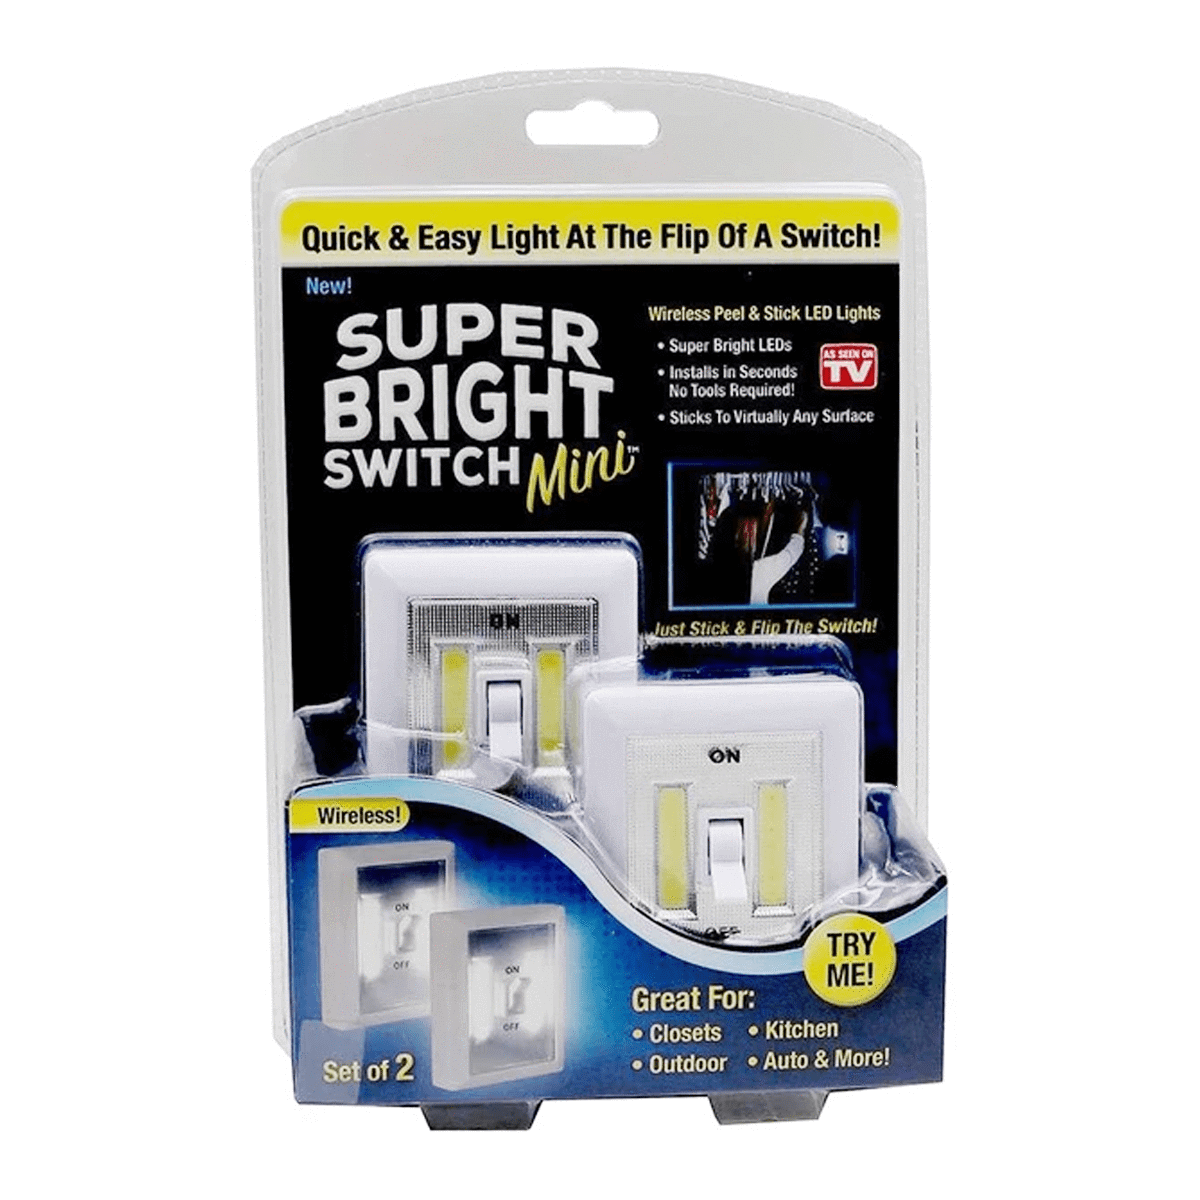 Super Bright Switch Mini Wireless Peel and Stick LED Lights